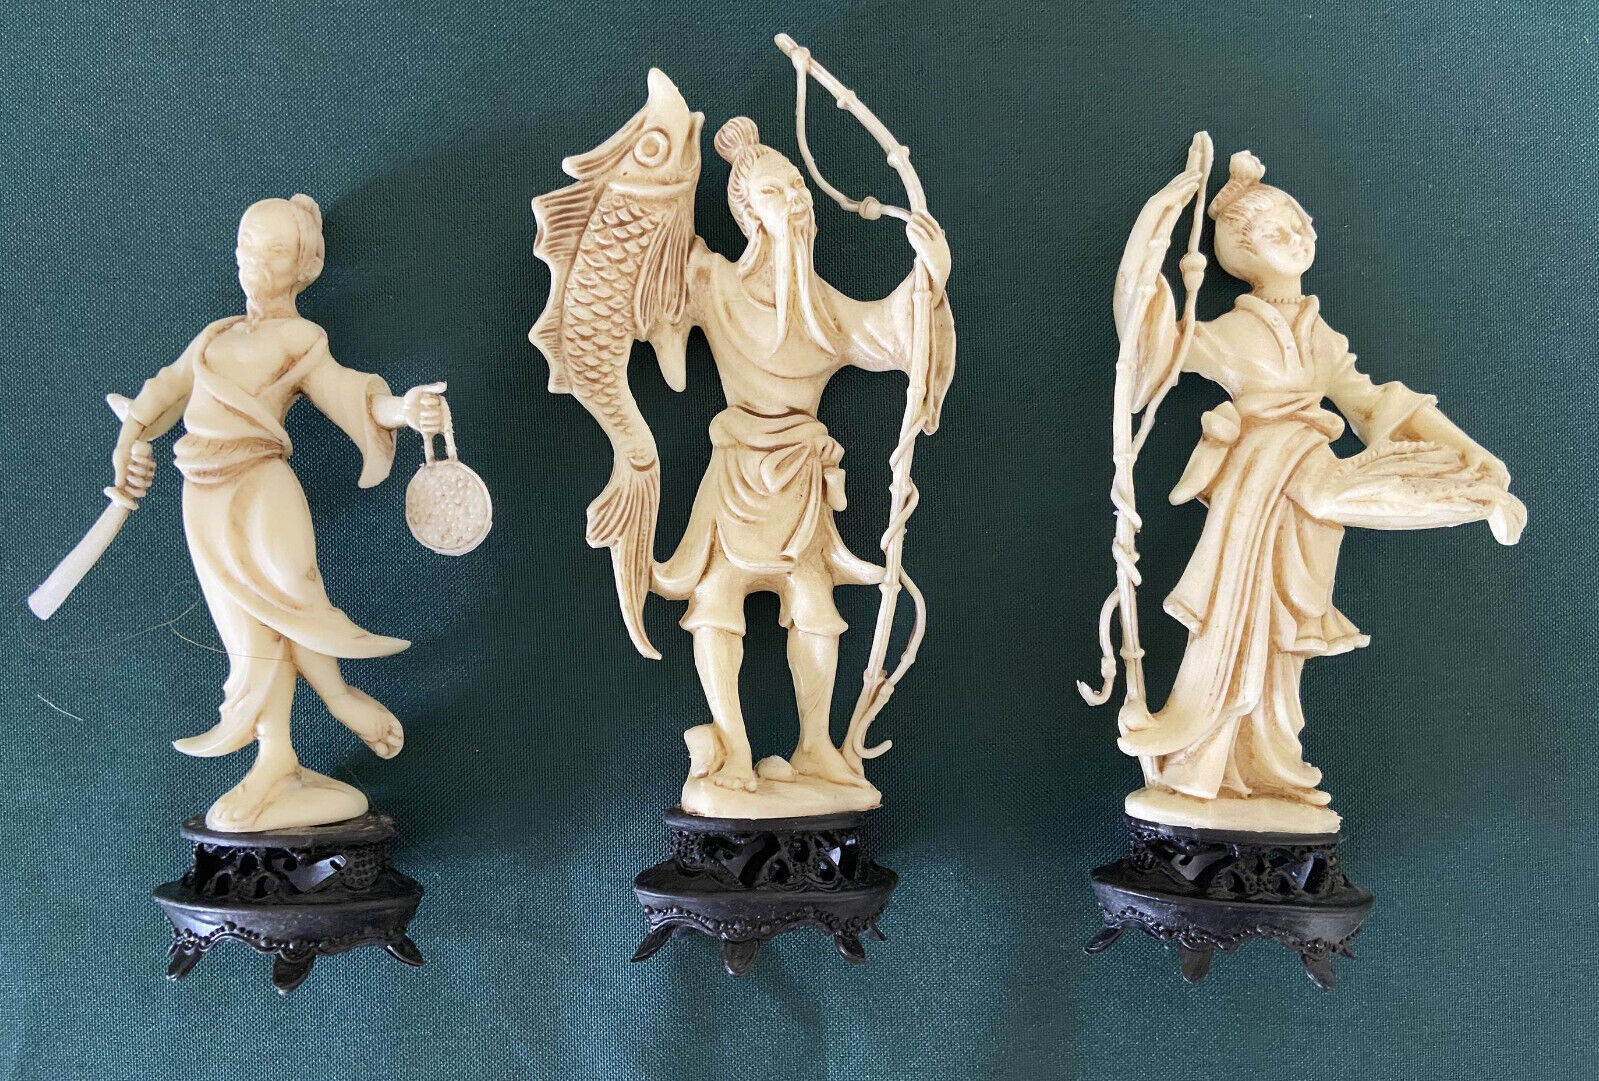 3 Japanese Figurines Made in Italy Fisherman & Woman Samurai Vintage White Resin